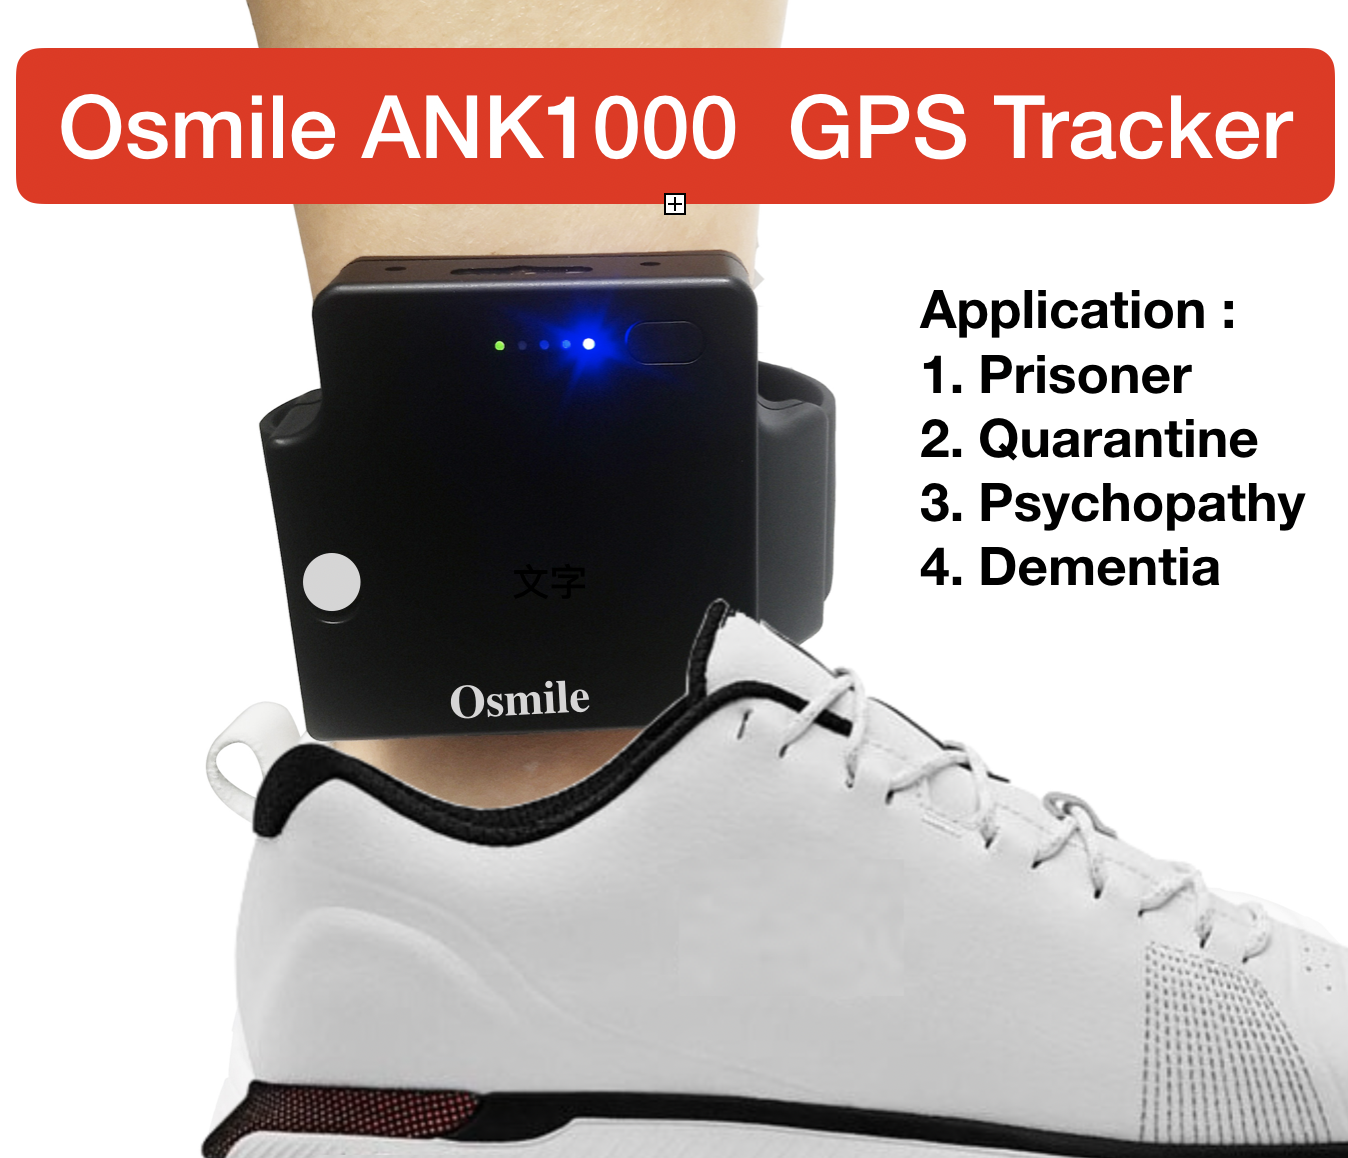 Osmile ANK1000 GPS Tracker for Prisoner, Quarantine, Psychopathy, Dementia & Alzheimer's patients